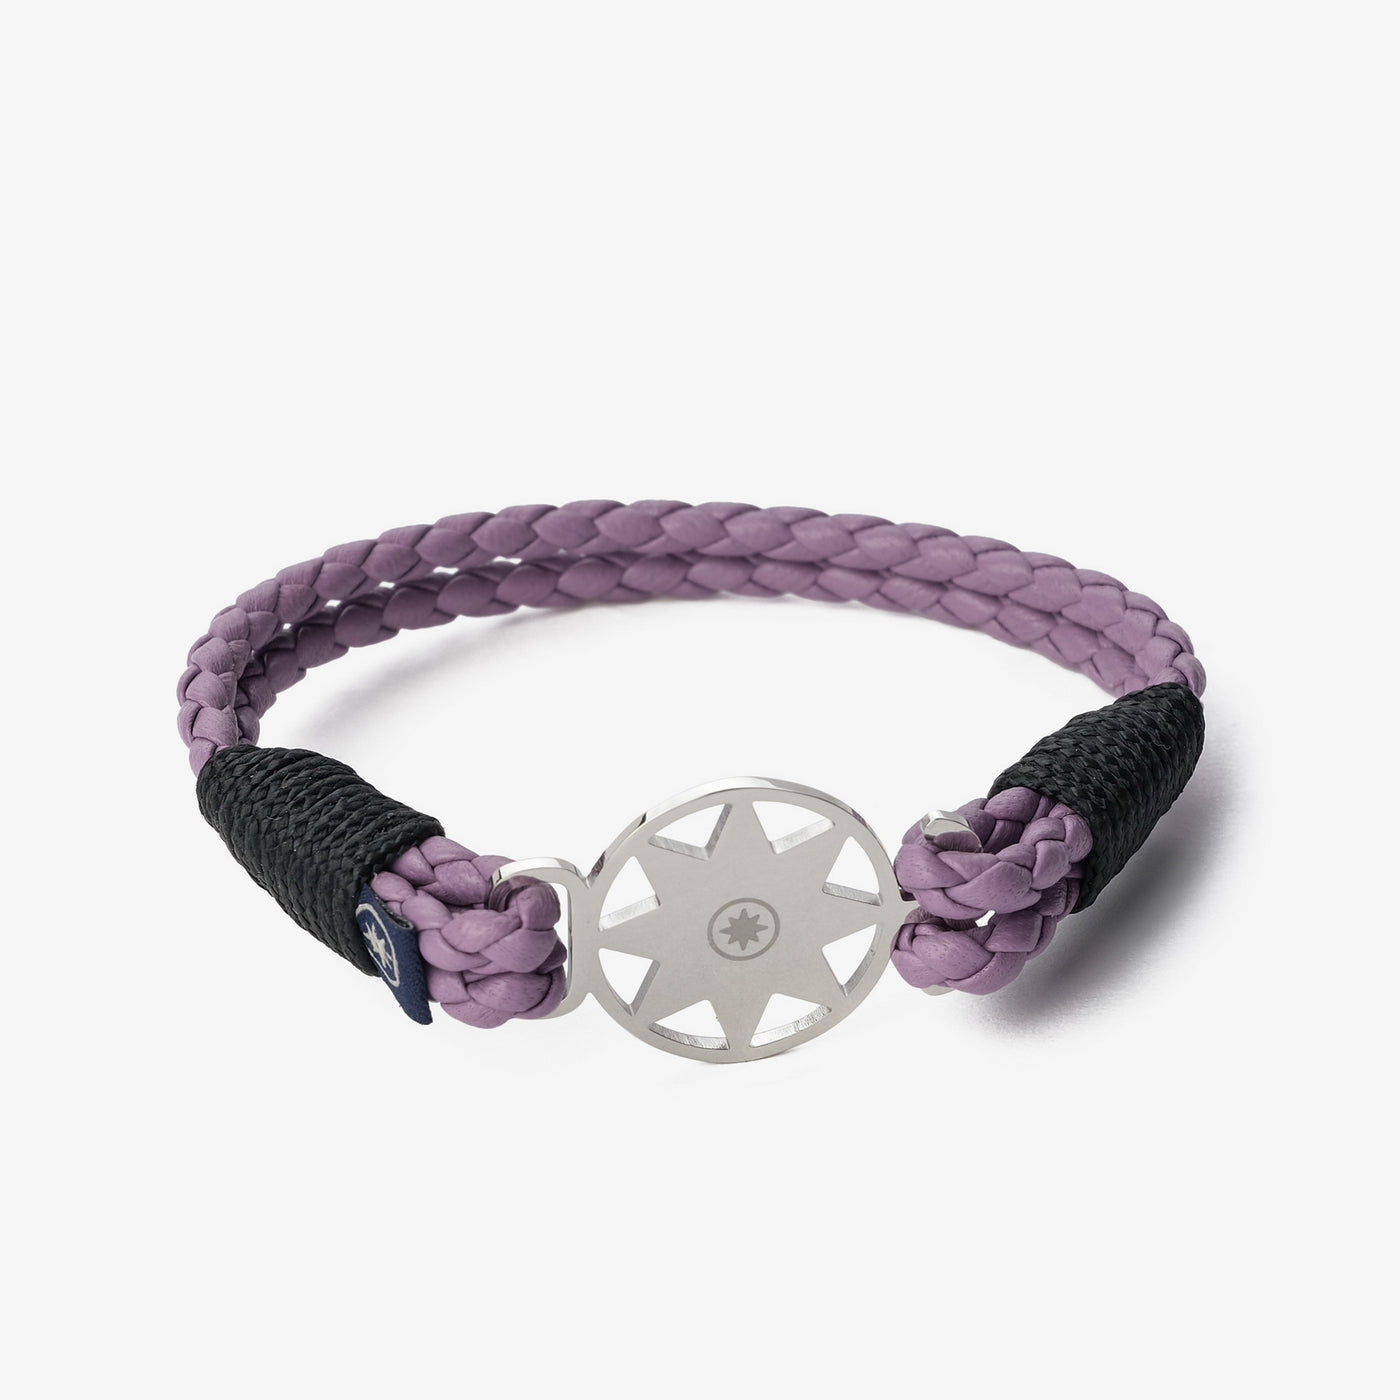 Lavender Twilight Braided Nappa Leather Bracelet